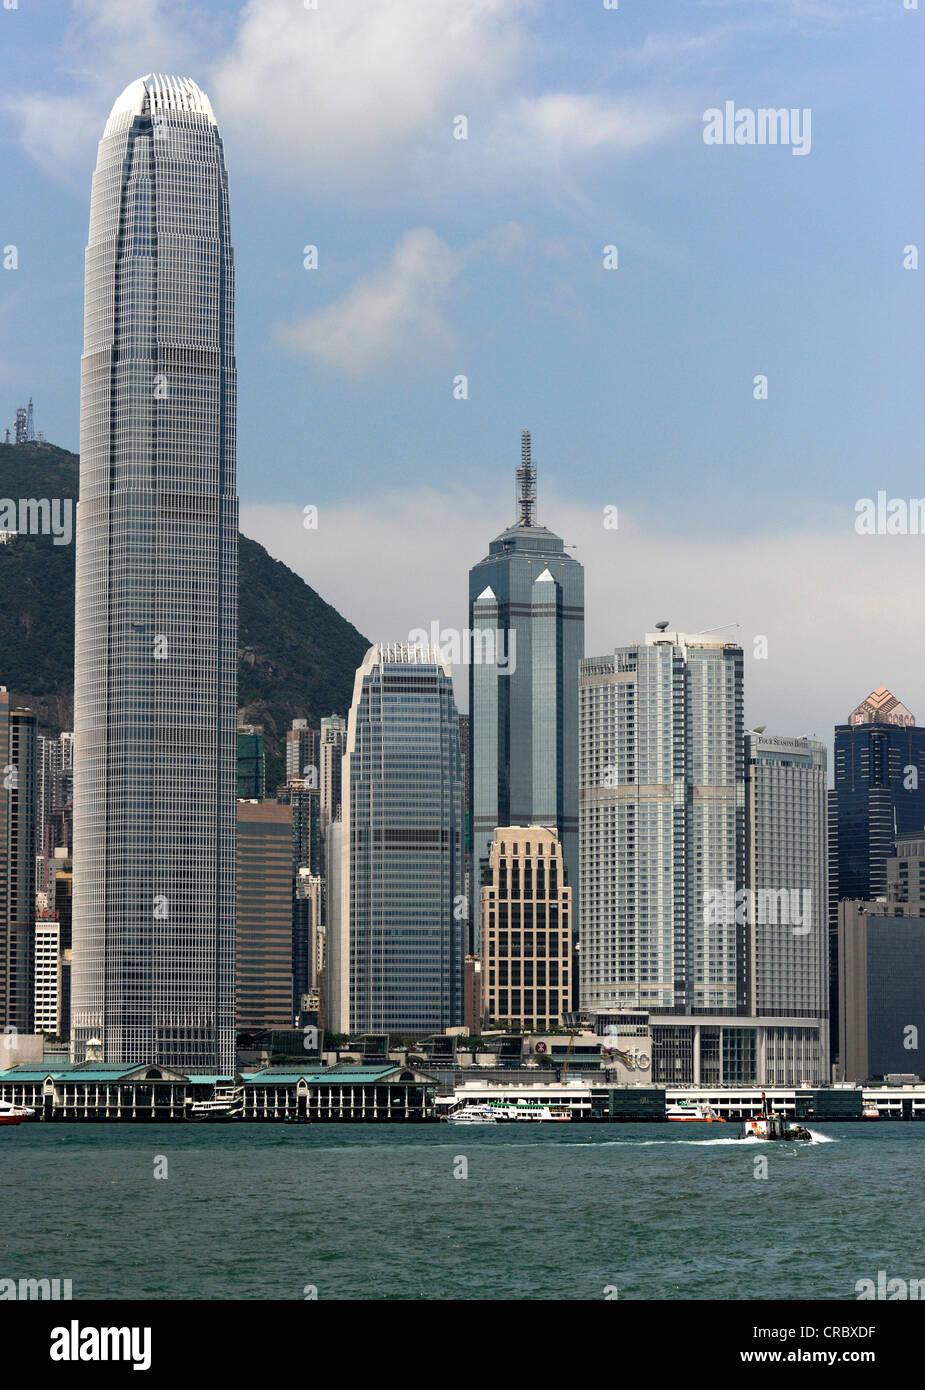 Skyline mit IFC Tower, Hong Kong, China, Asien Stockfoto